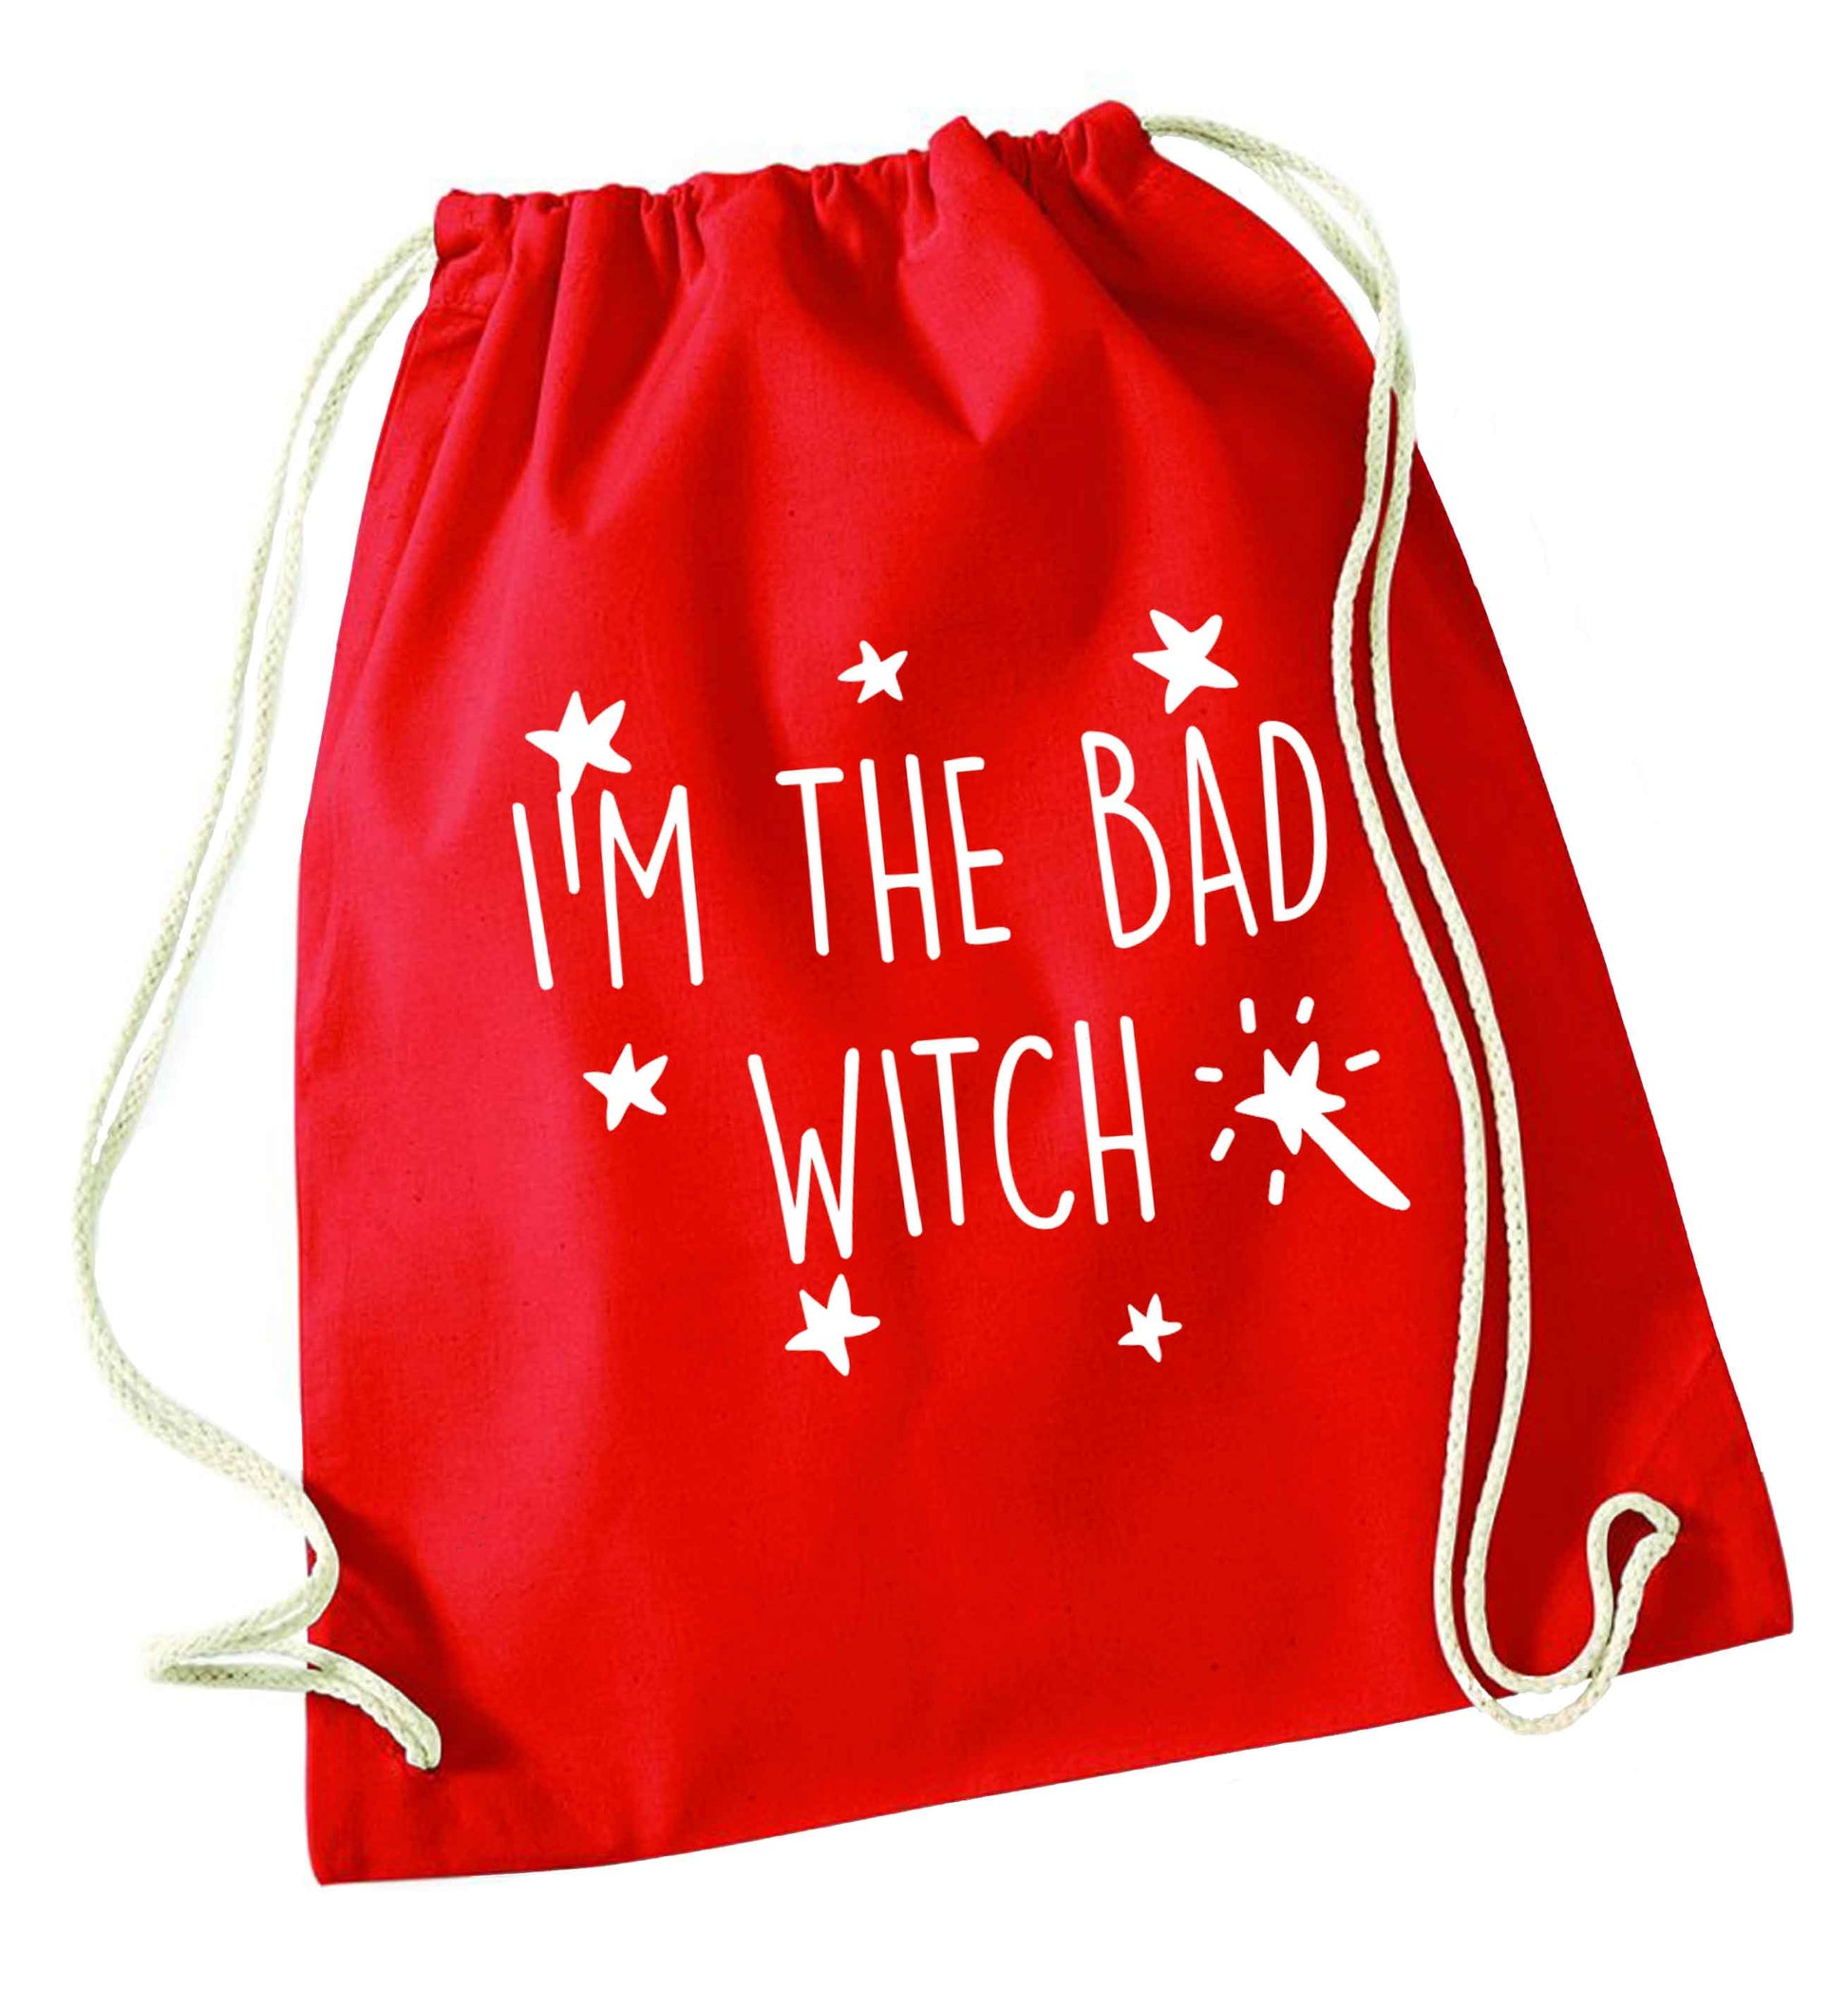 Bad witch red drawstring bag 